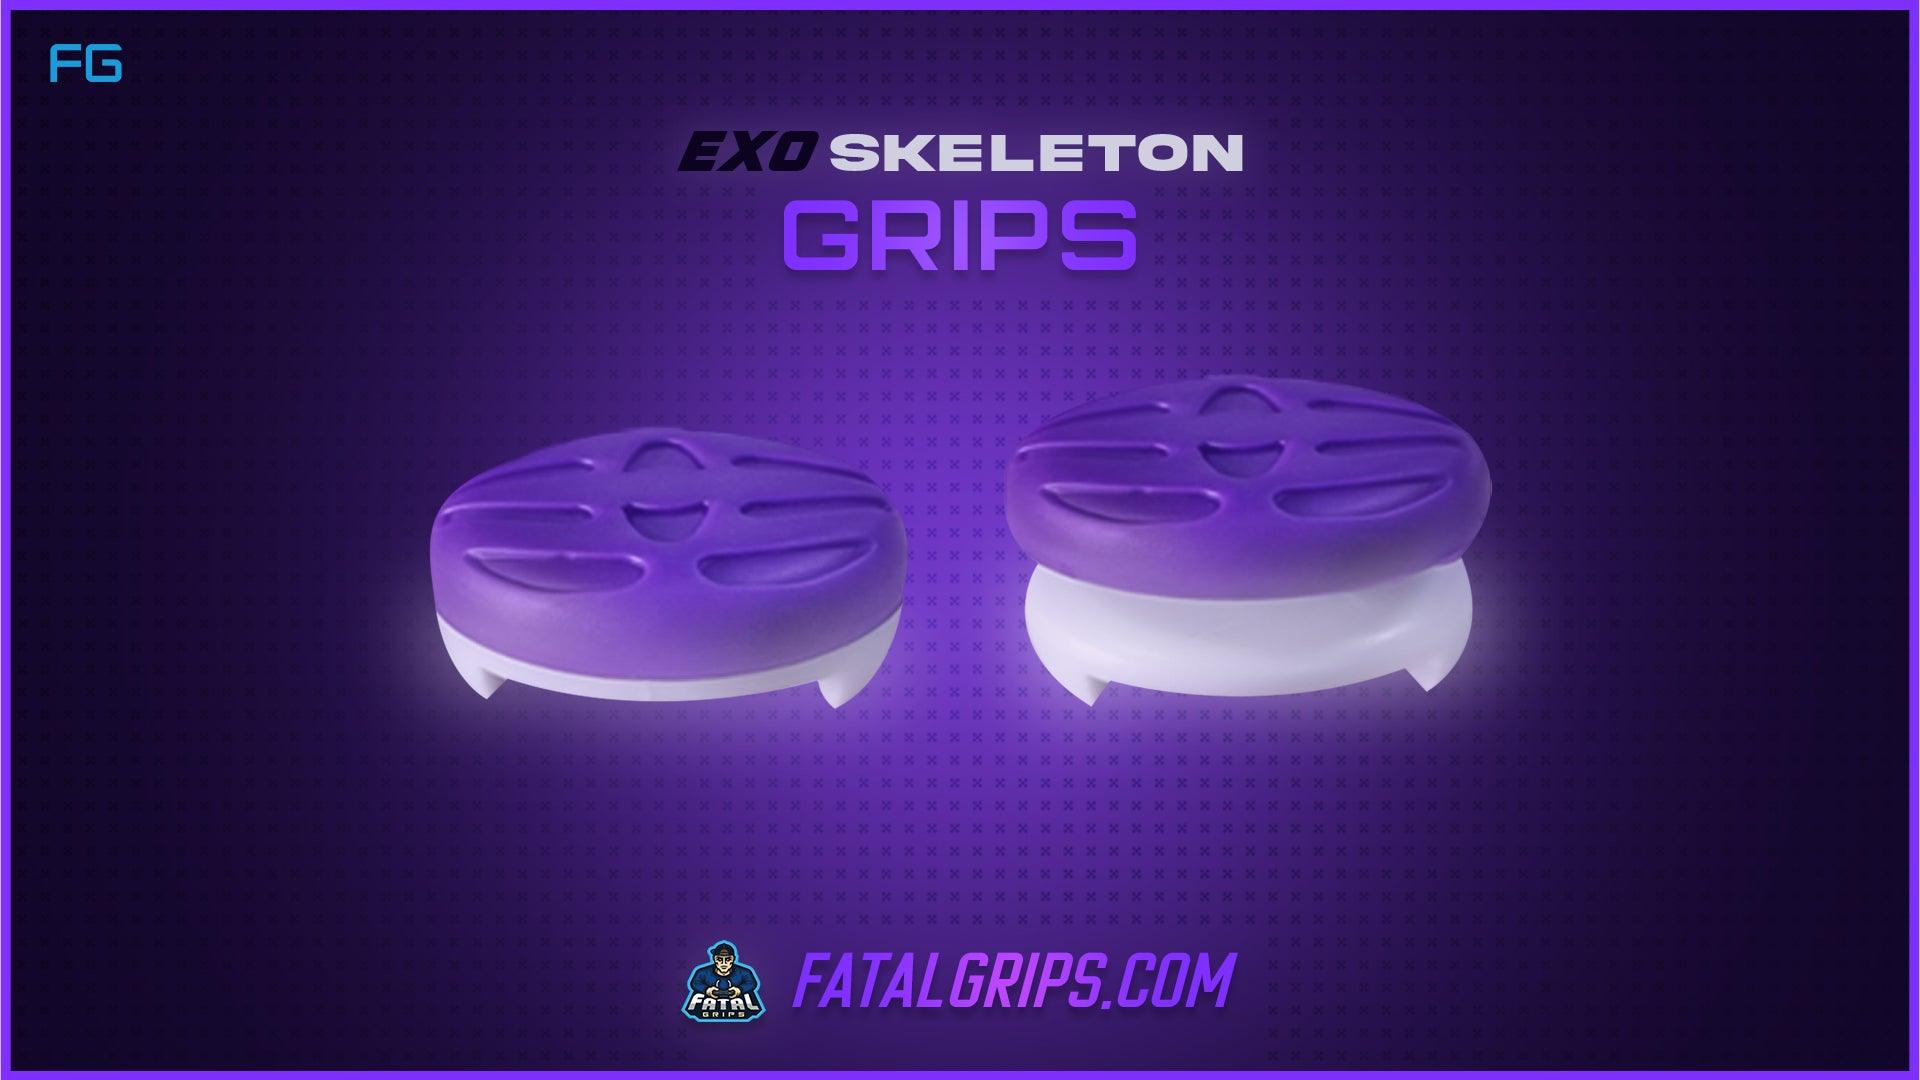 Exoskeleton Grips - Fatal Grips